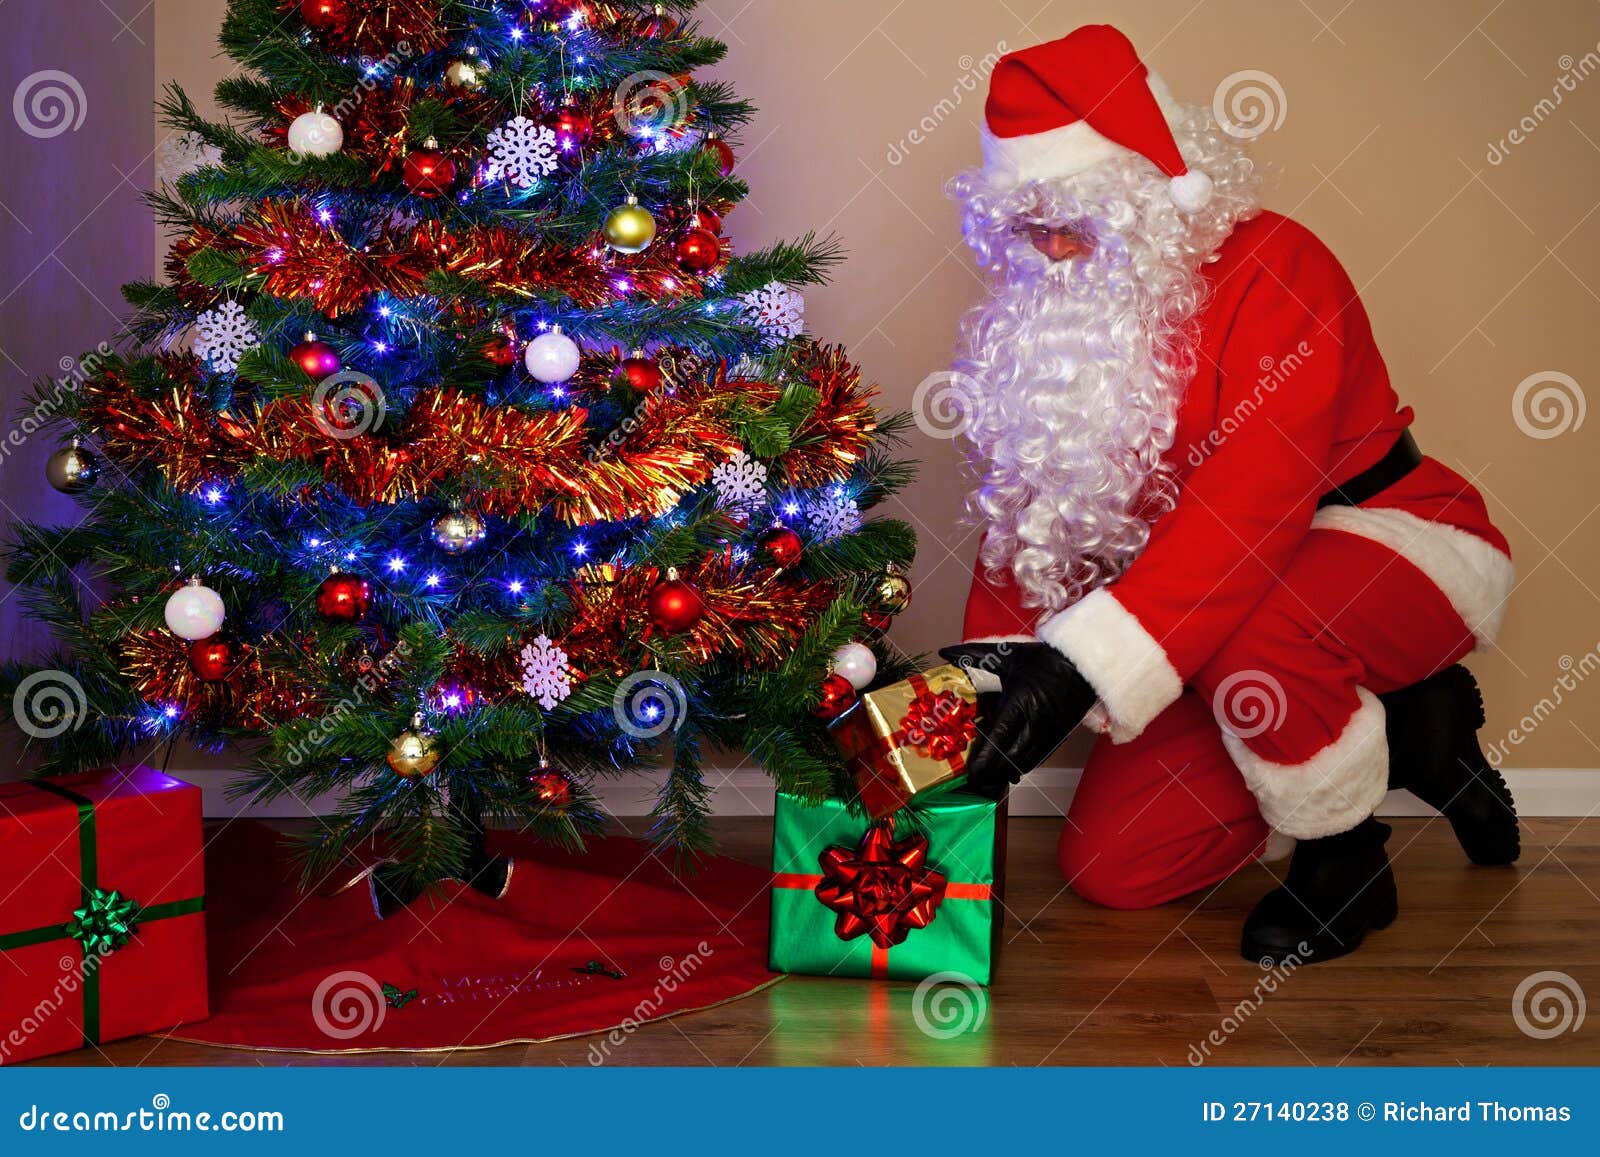 santa claus delivering presents under the tree.